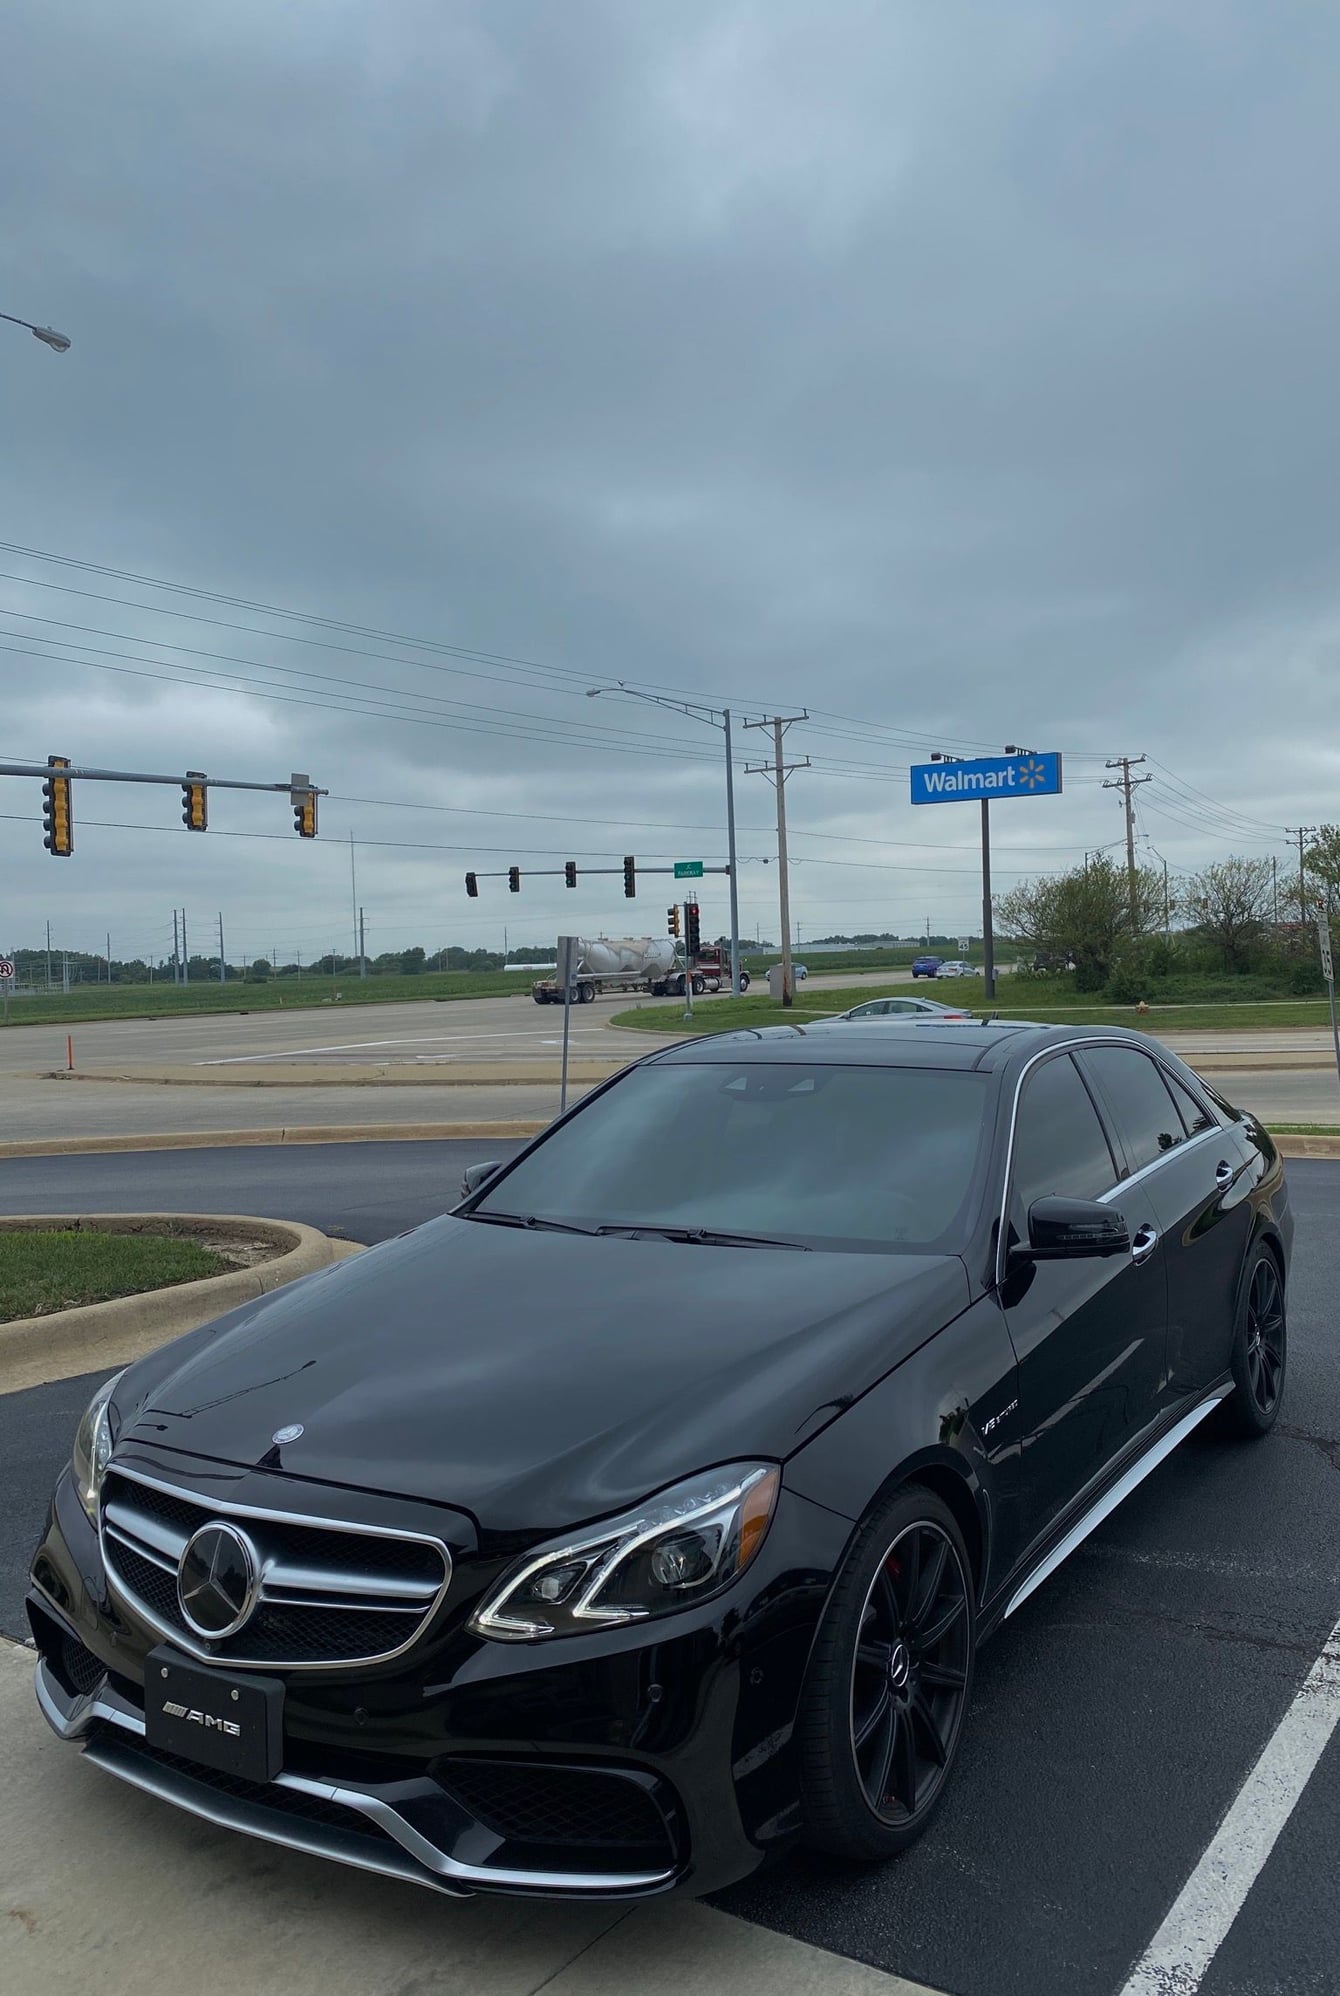 2014 Mercedes-Benz E63 AMG S - 2014 E63 S - Used - VIN WDDHF7GB1EA842757 - 99,000 Miles - 8 cyl - AWD - Automatic - Sedan - Black - Des Moines, IA 50263, United States